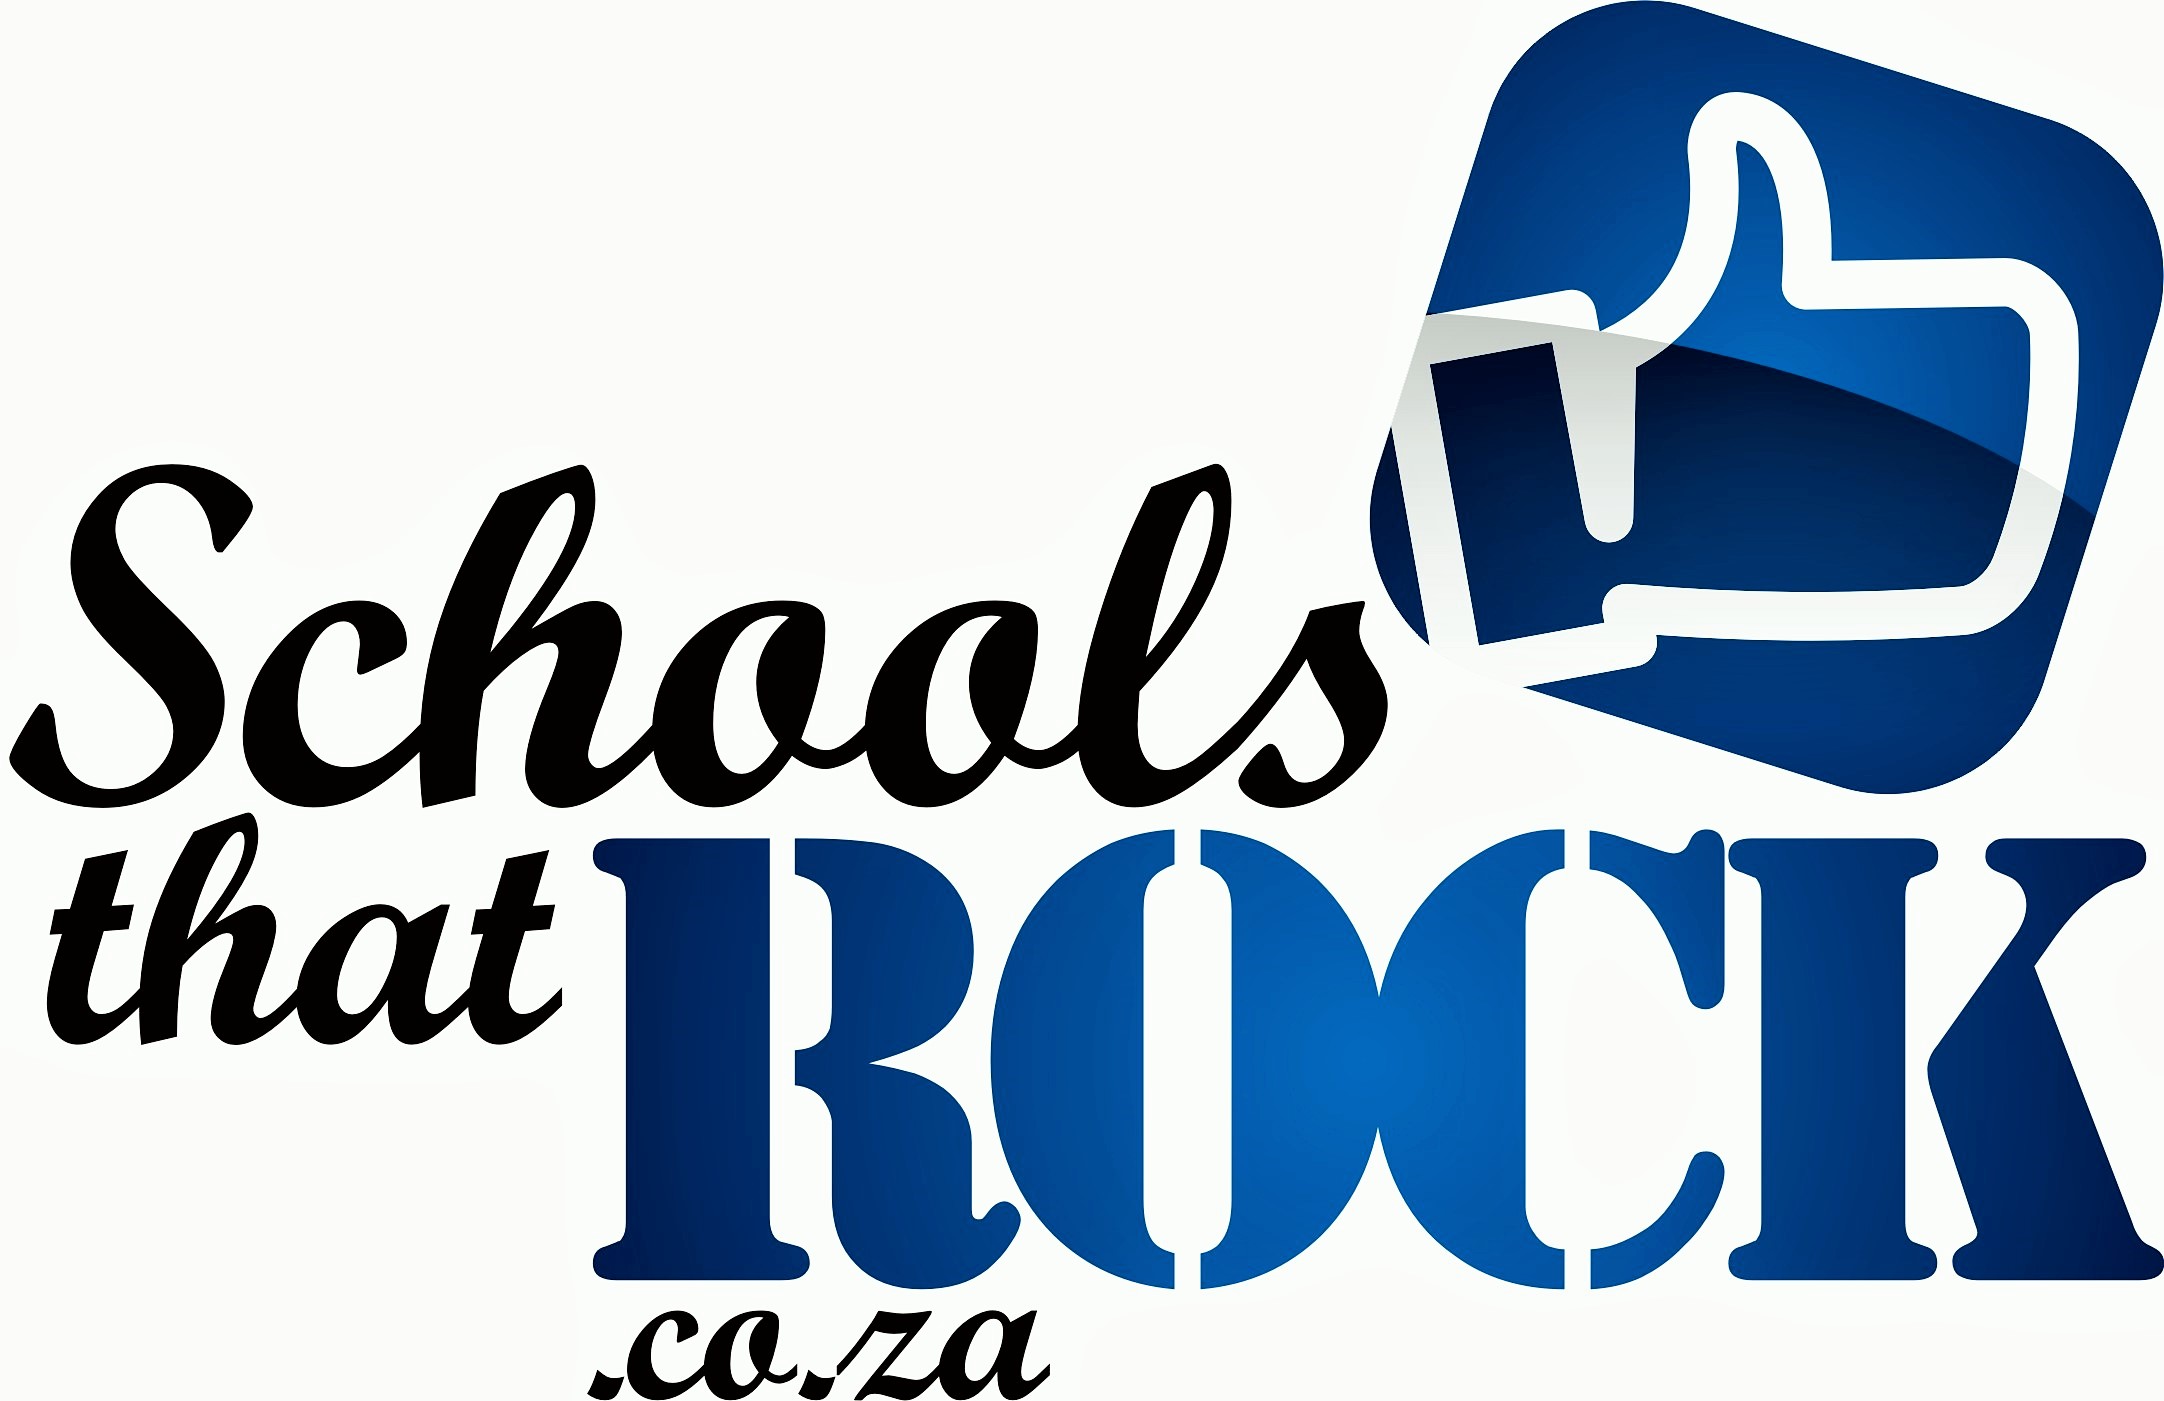 Schools That Rock